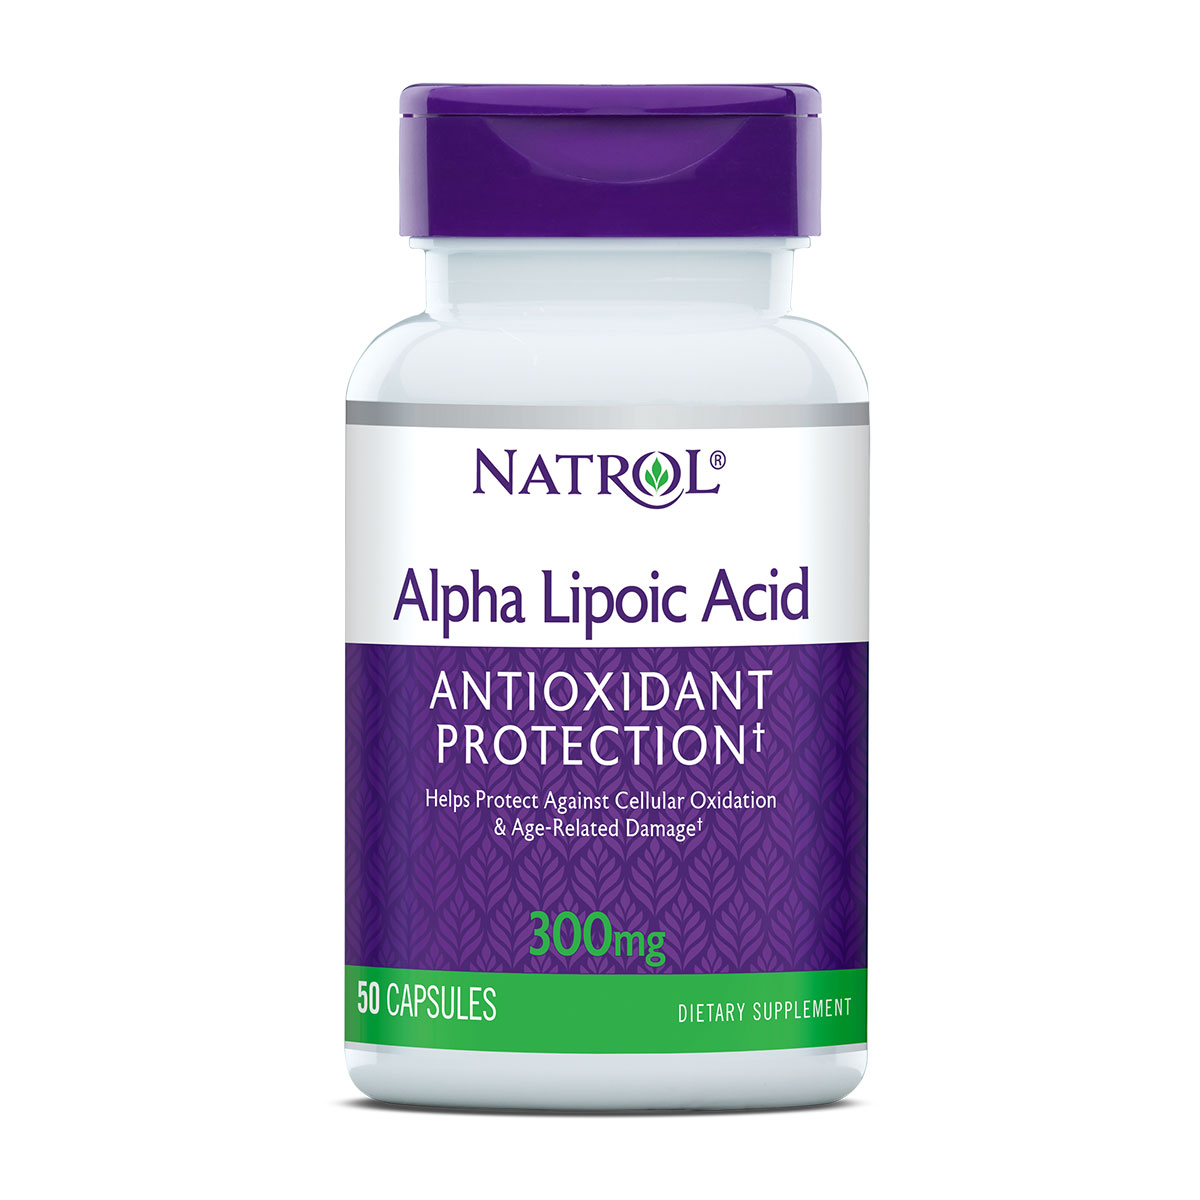 Natrol Alpha Lipoic Acid 300mg